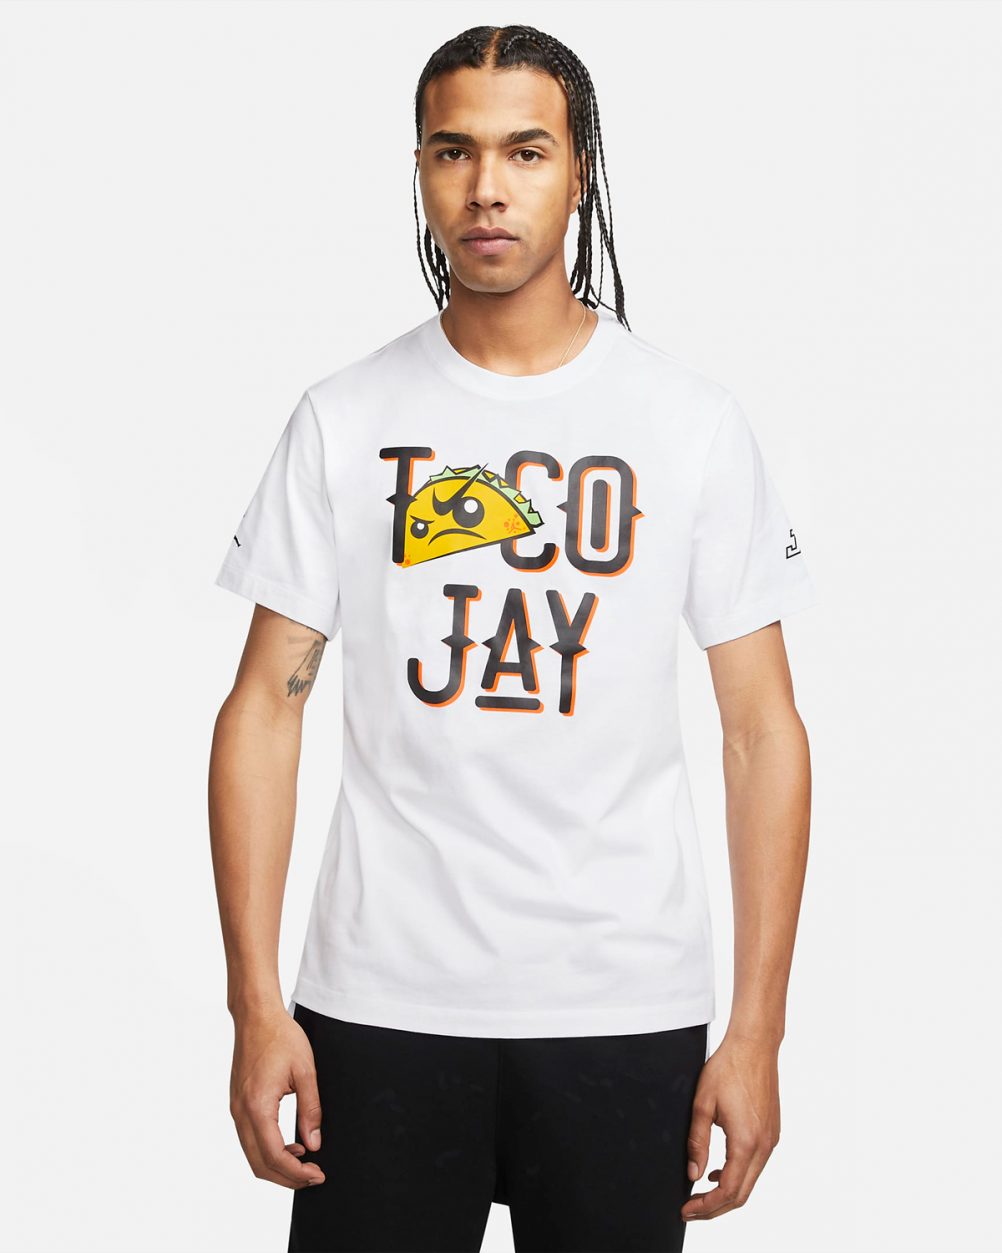 Jordan Taco Jay Shoes Shirts and Hoodie